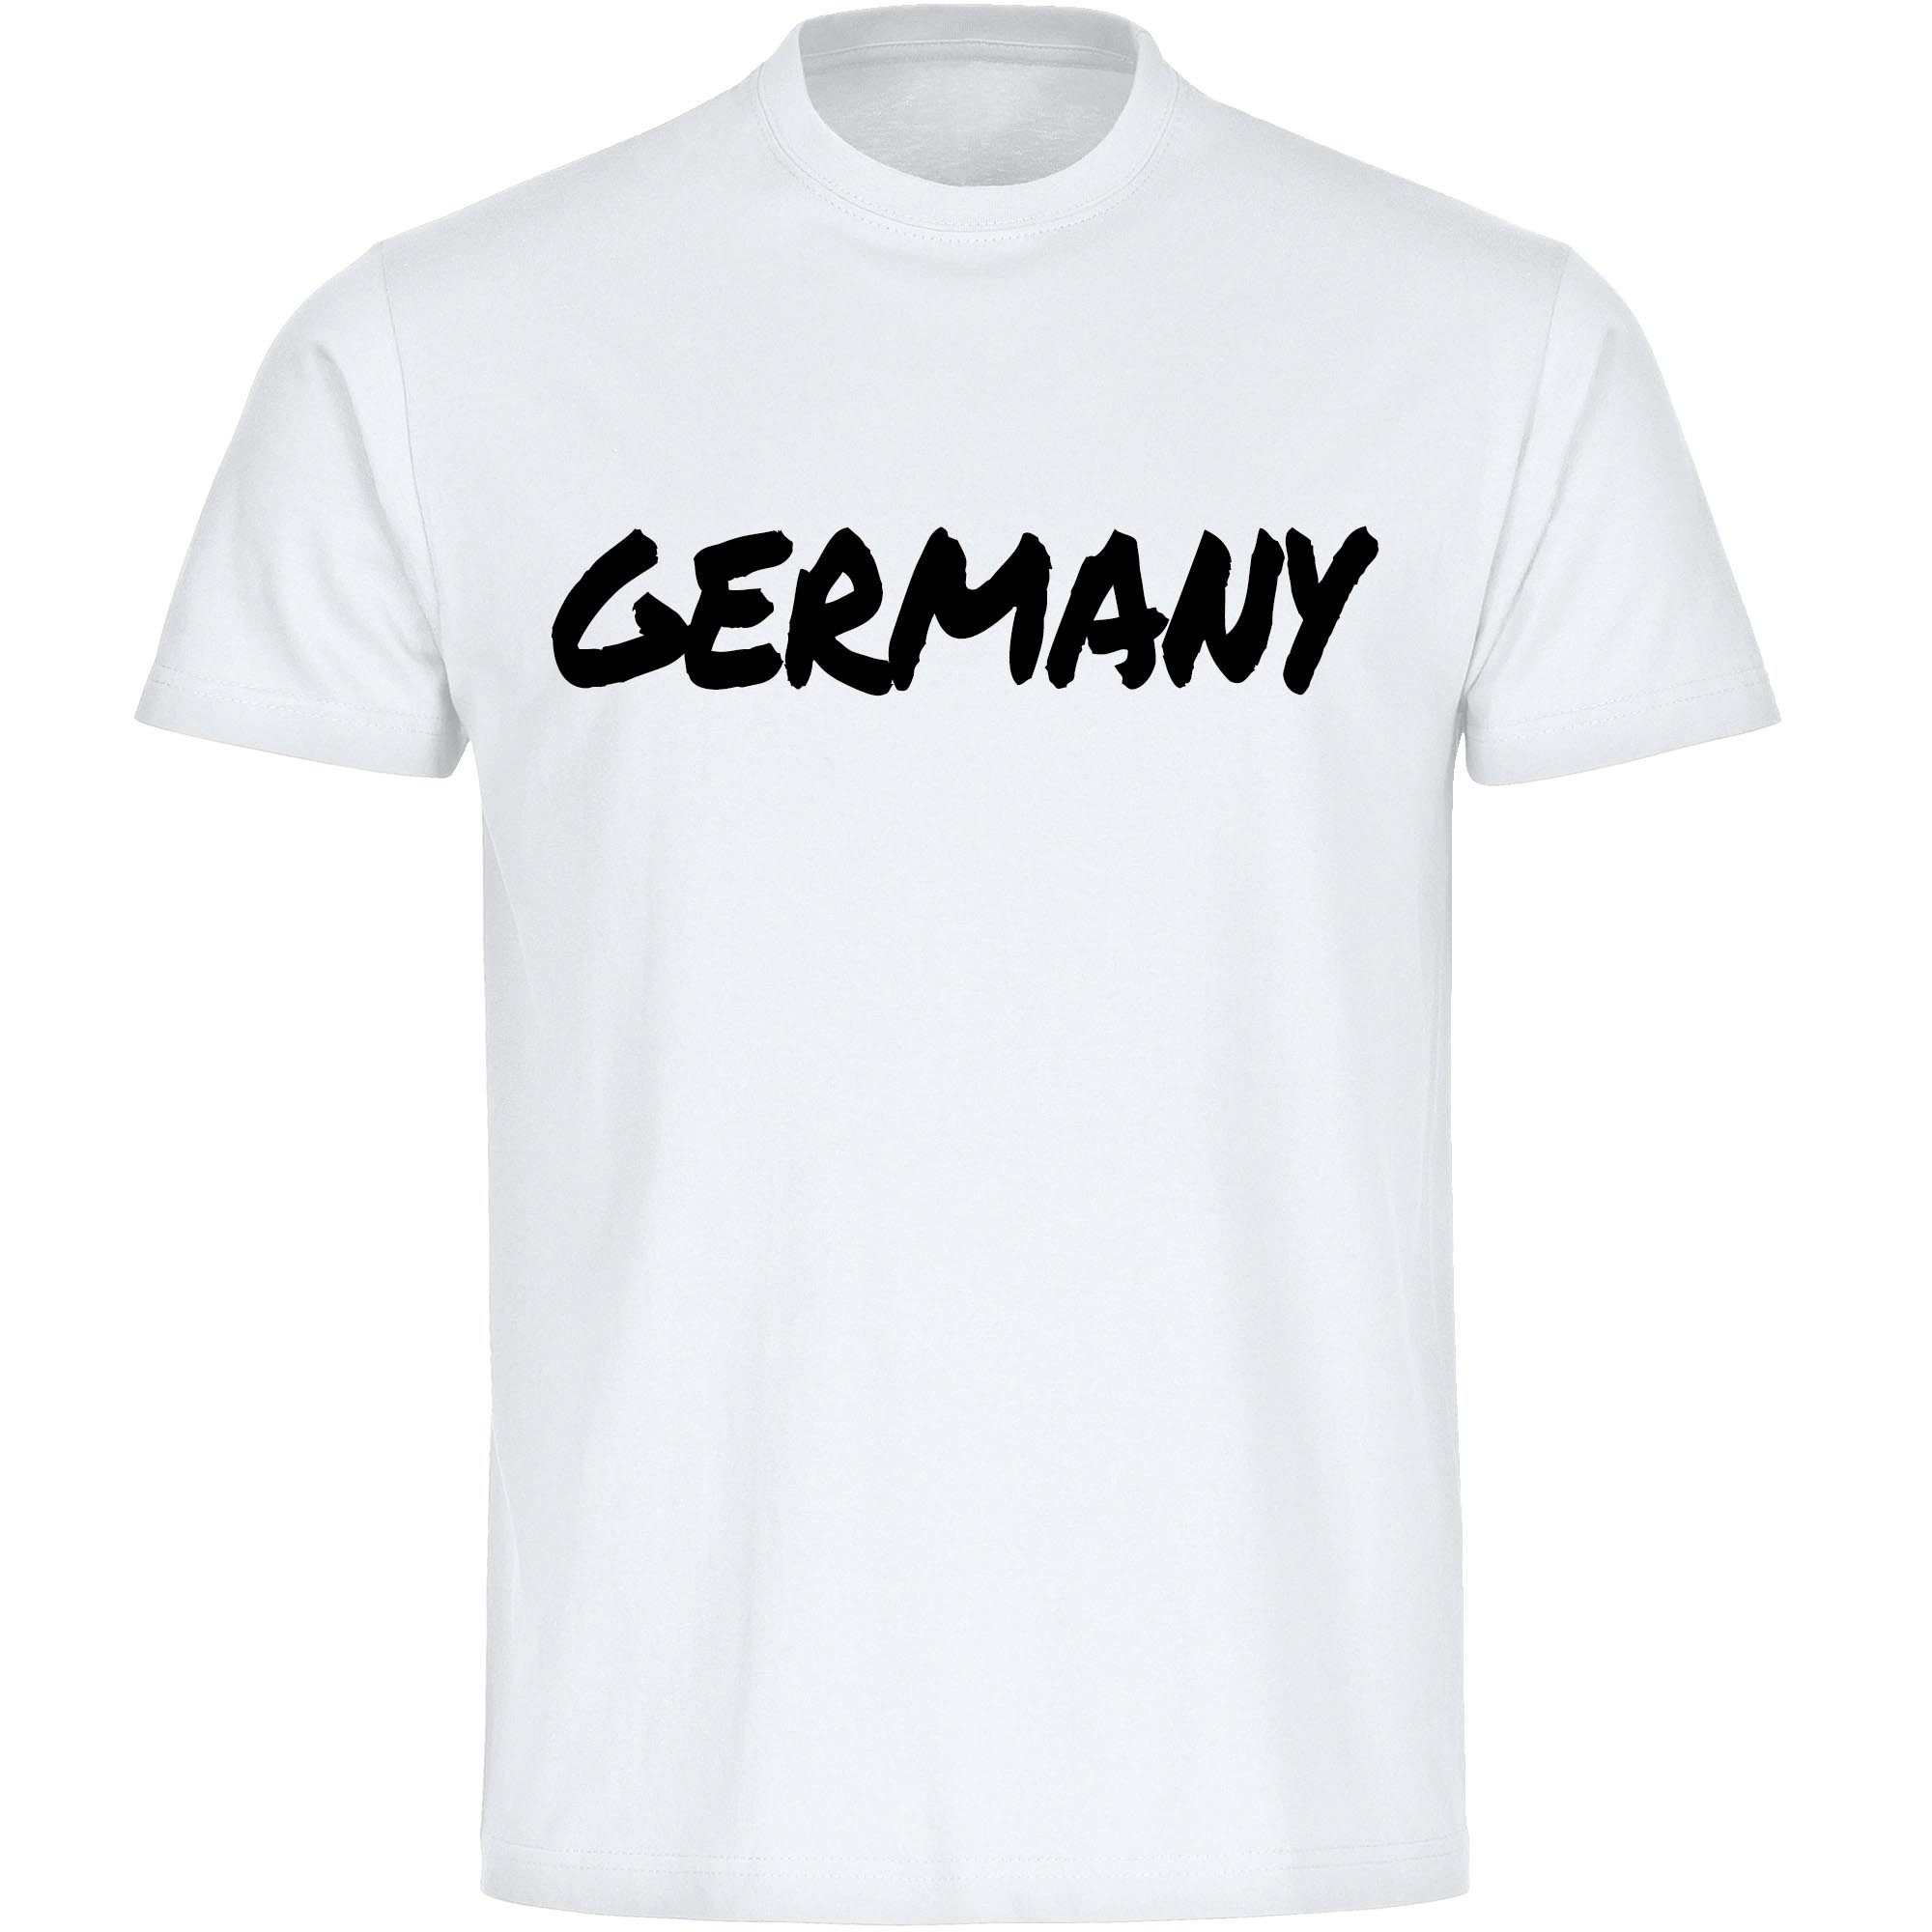 multifanshop T-Shirt Kinder Germany - Textmarker - Boy Girl